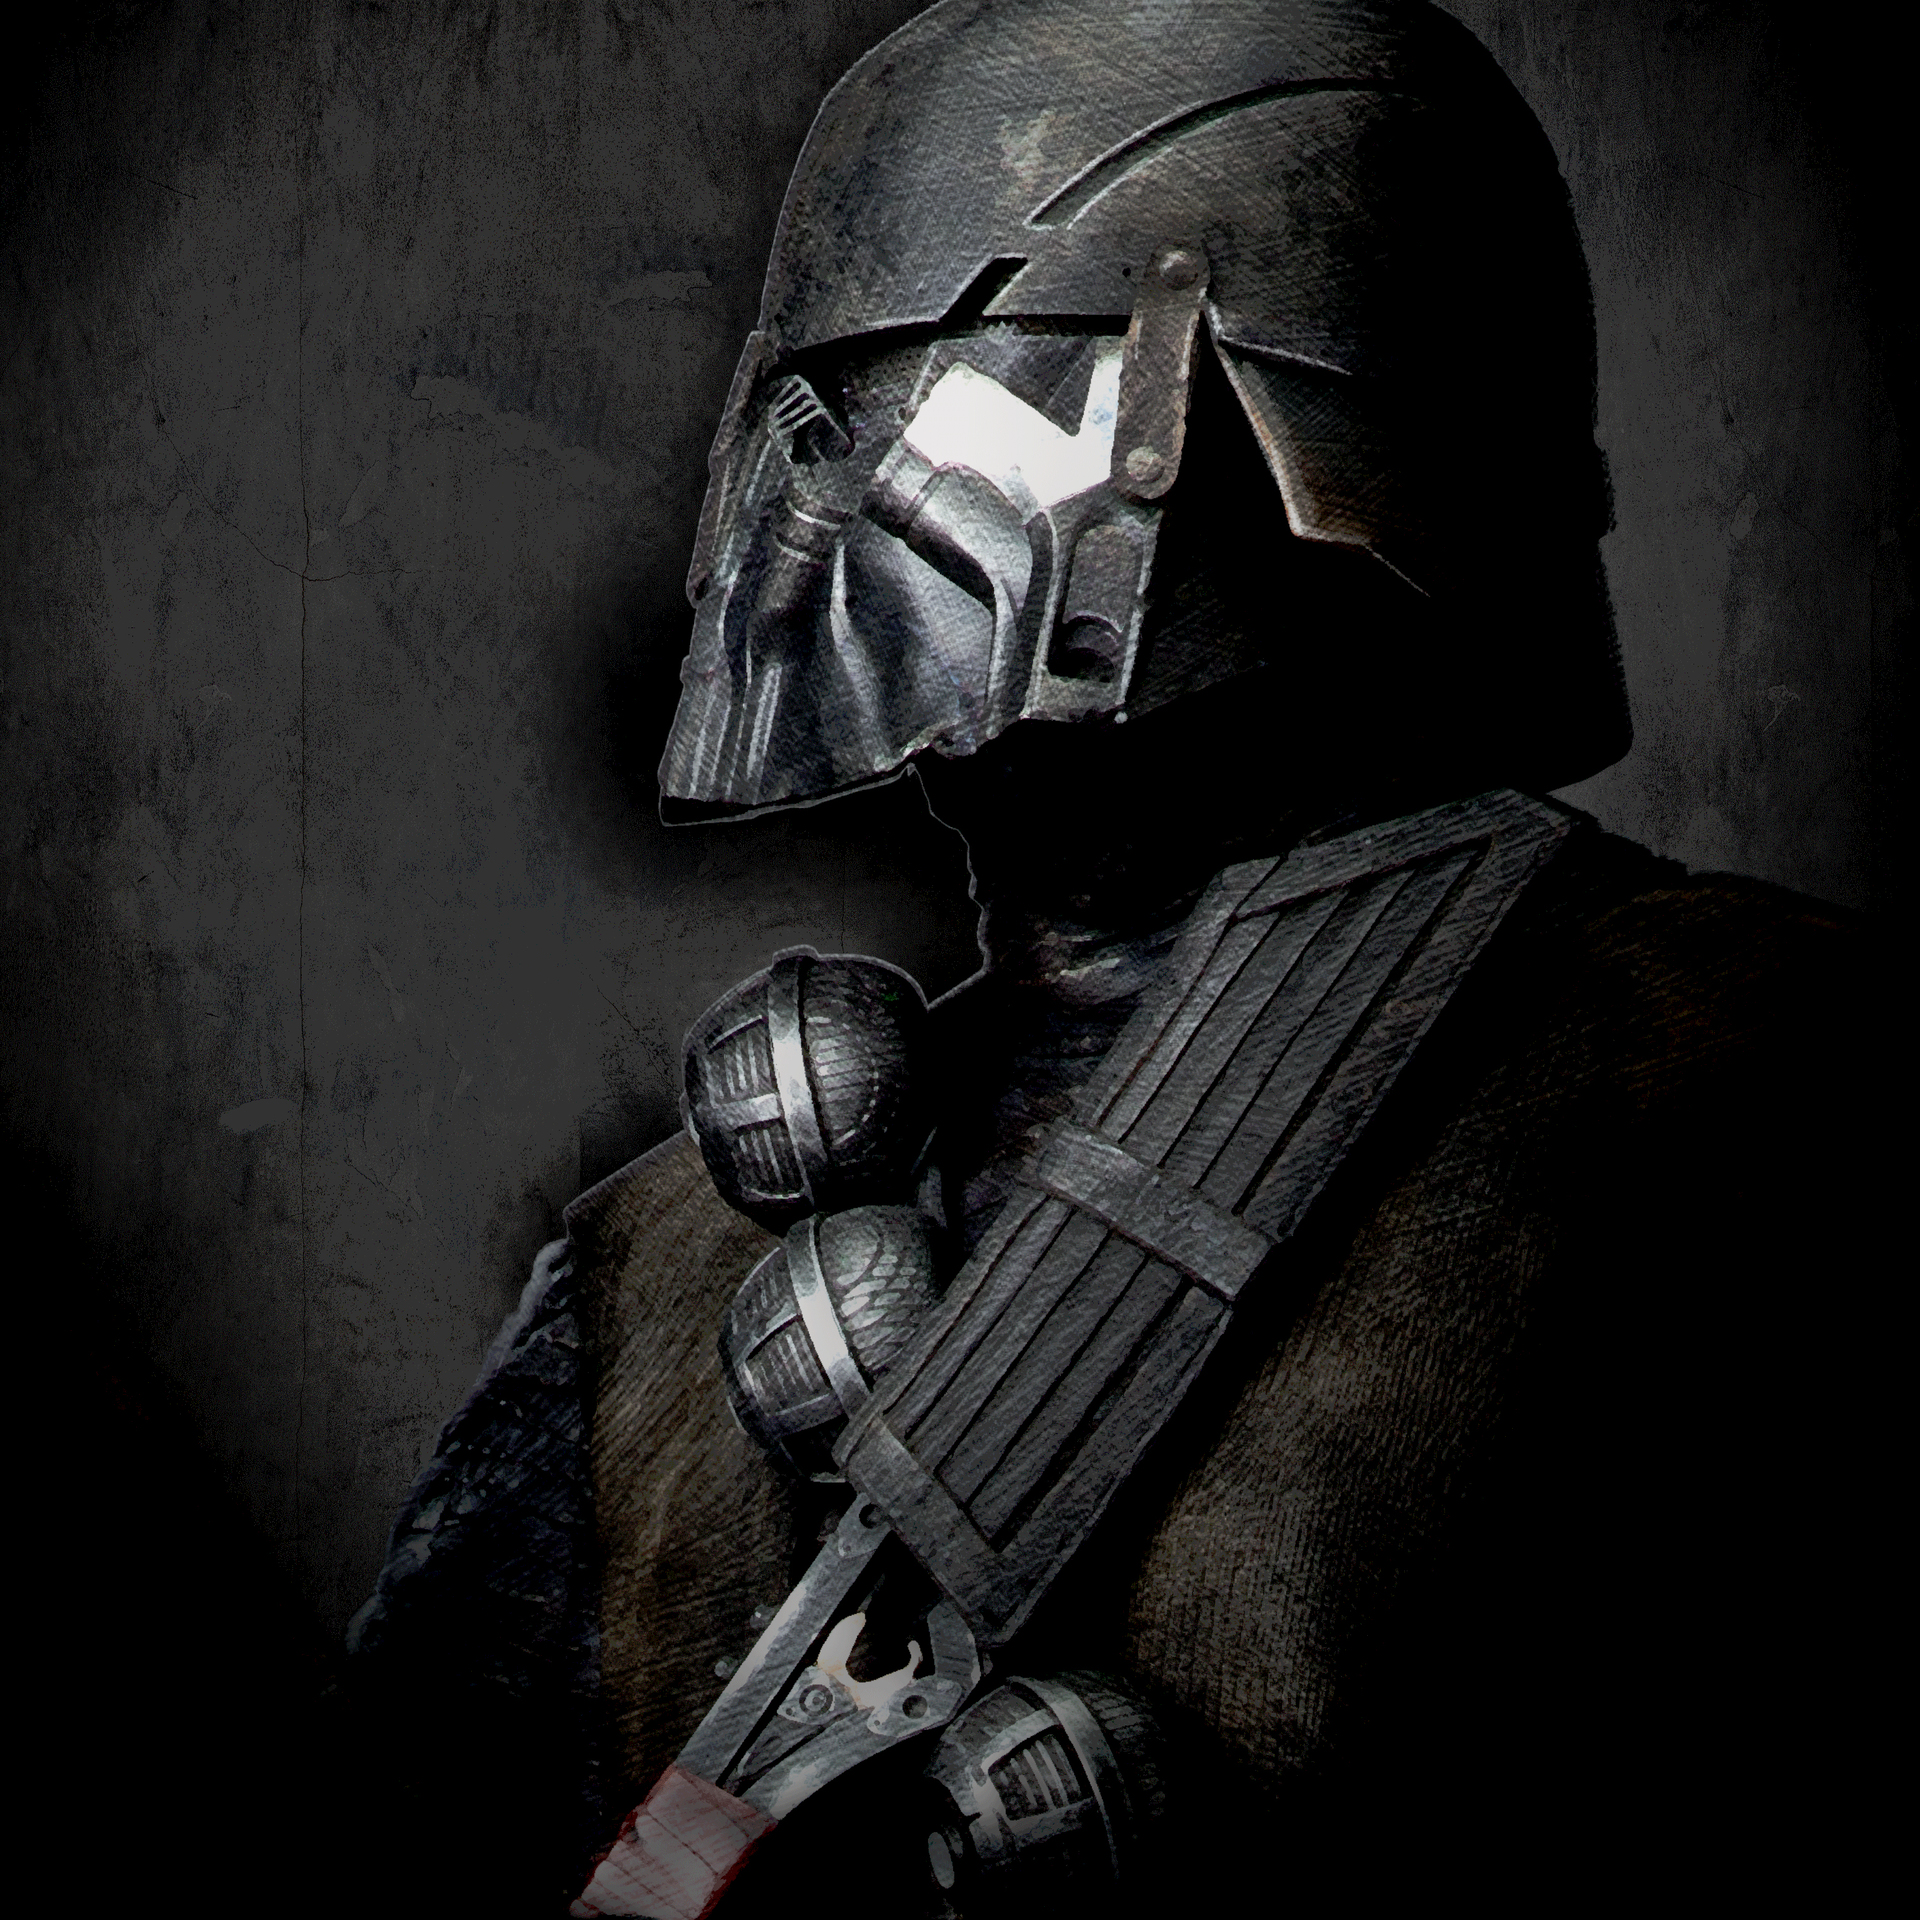 star wars wallpaper,darkness,personal protective equipment,fictional character,helmet,illustration